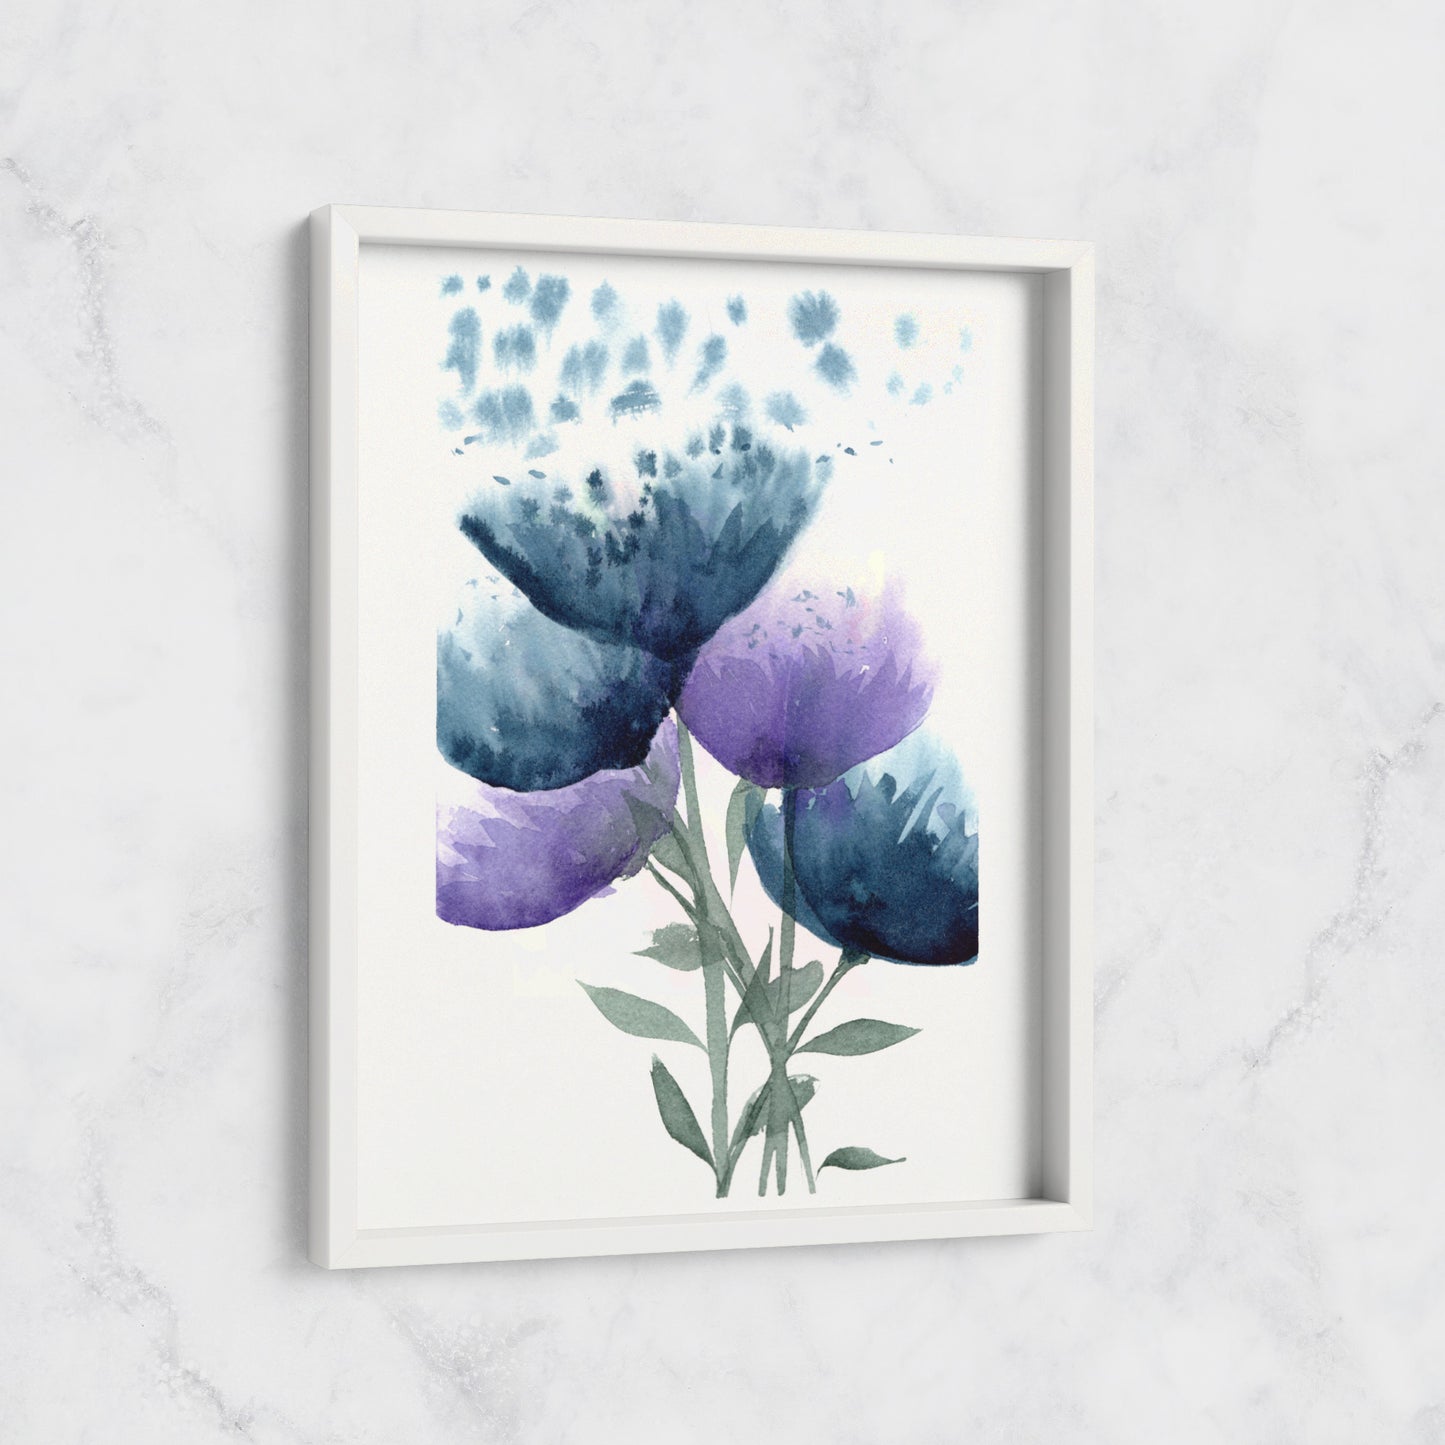 Windy Flowers - Print